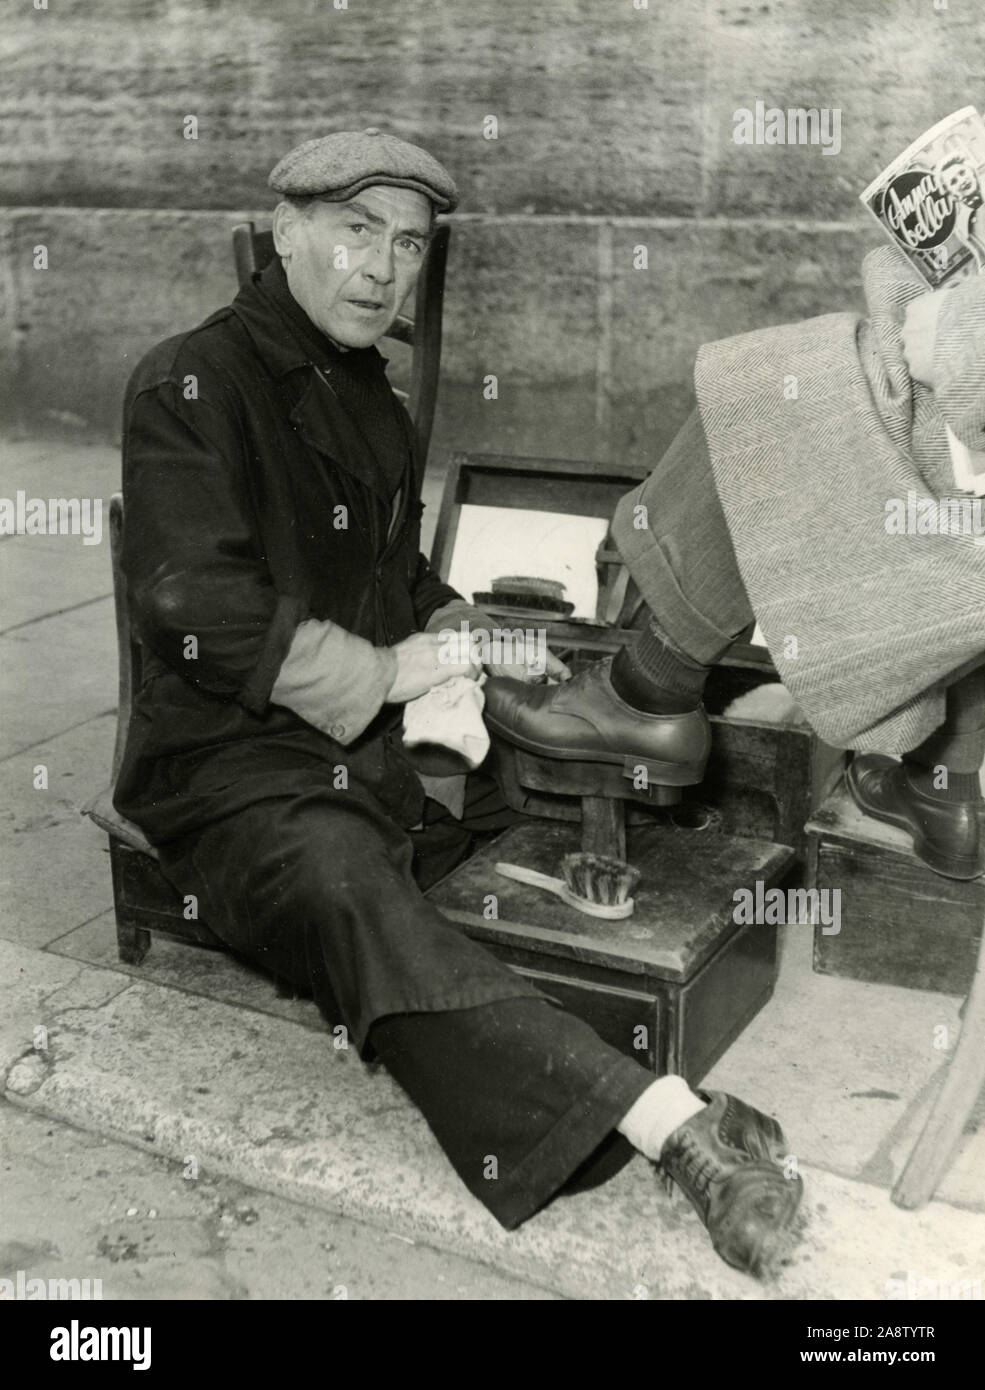 Shoeshiner italien Dandolo Forti, Rome, Italie 1950 Banque D'Images